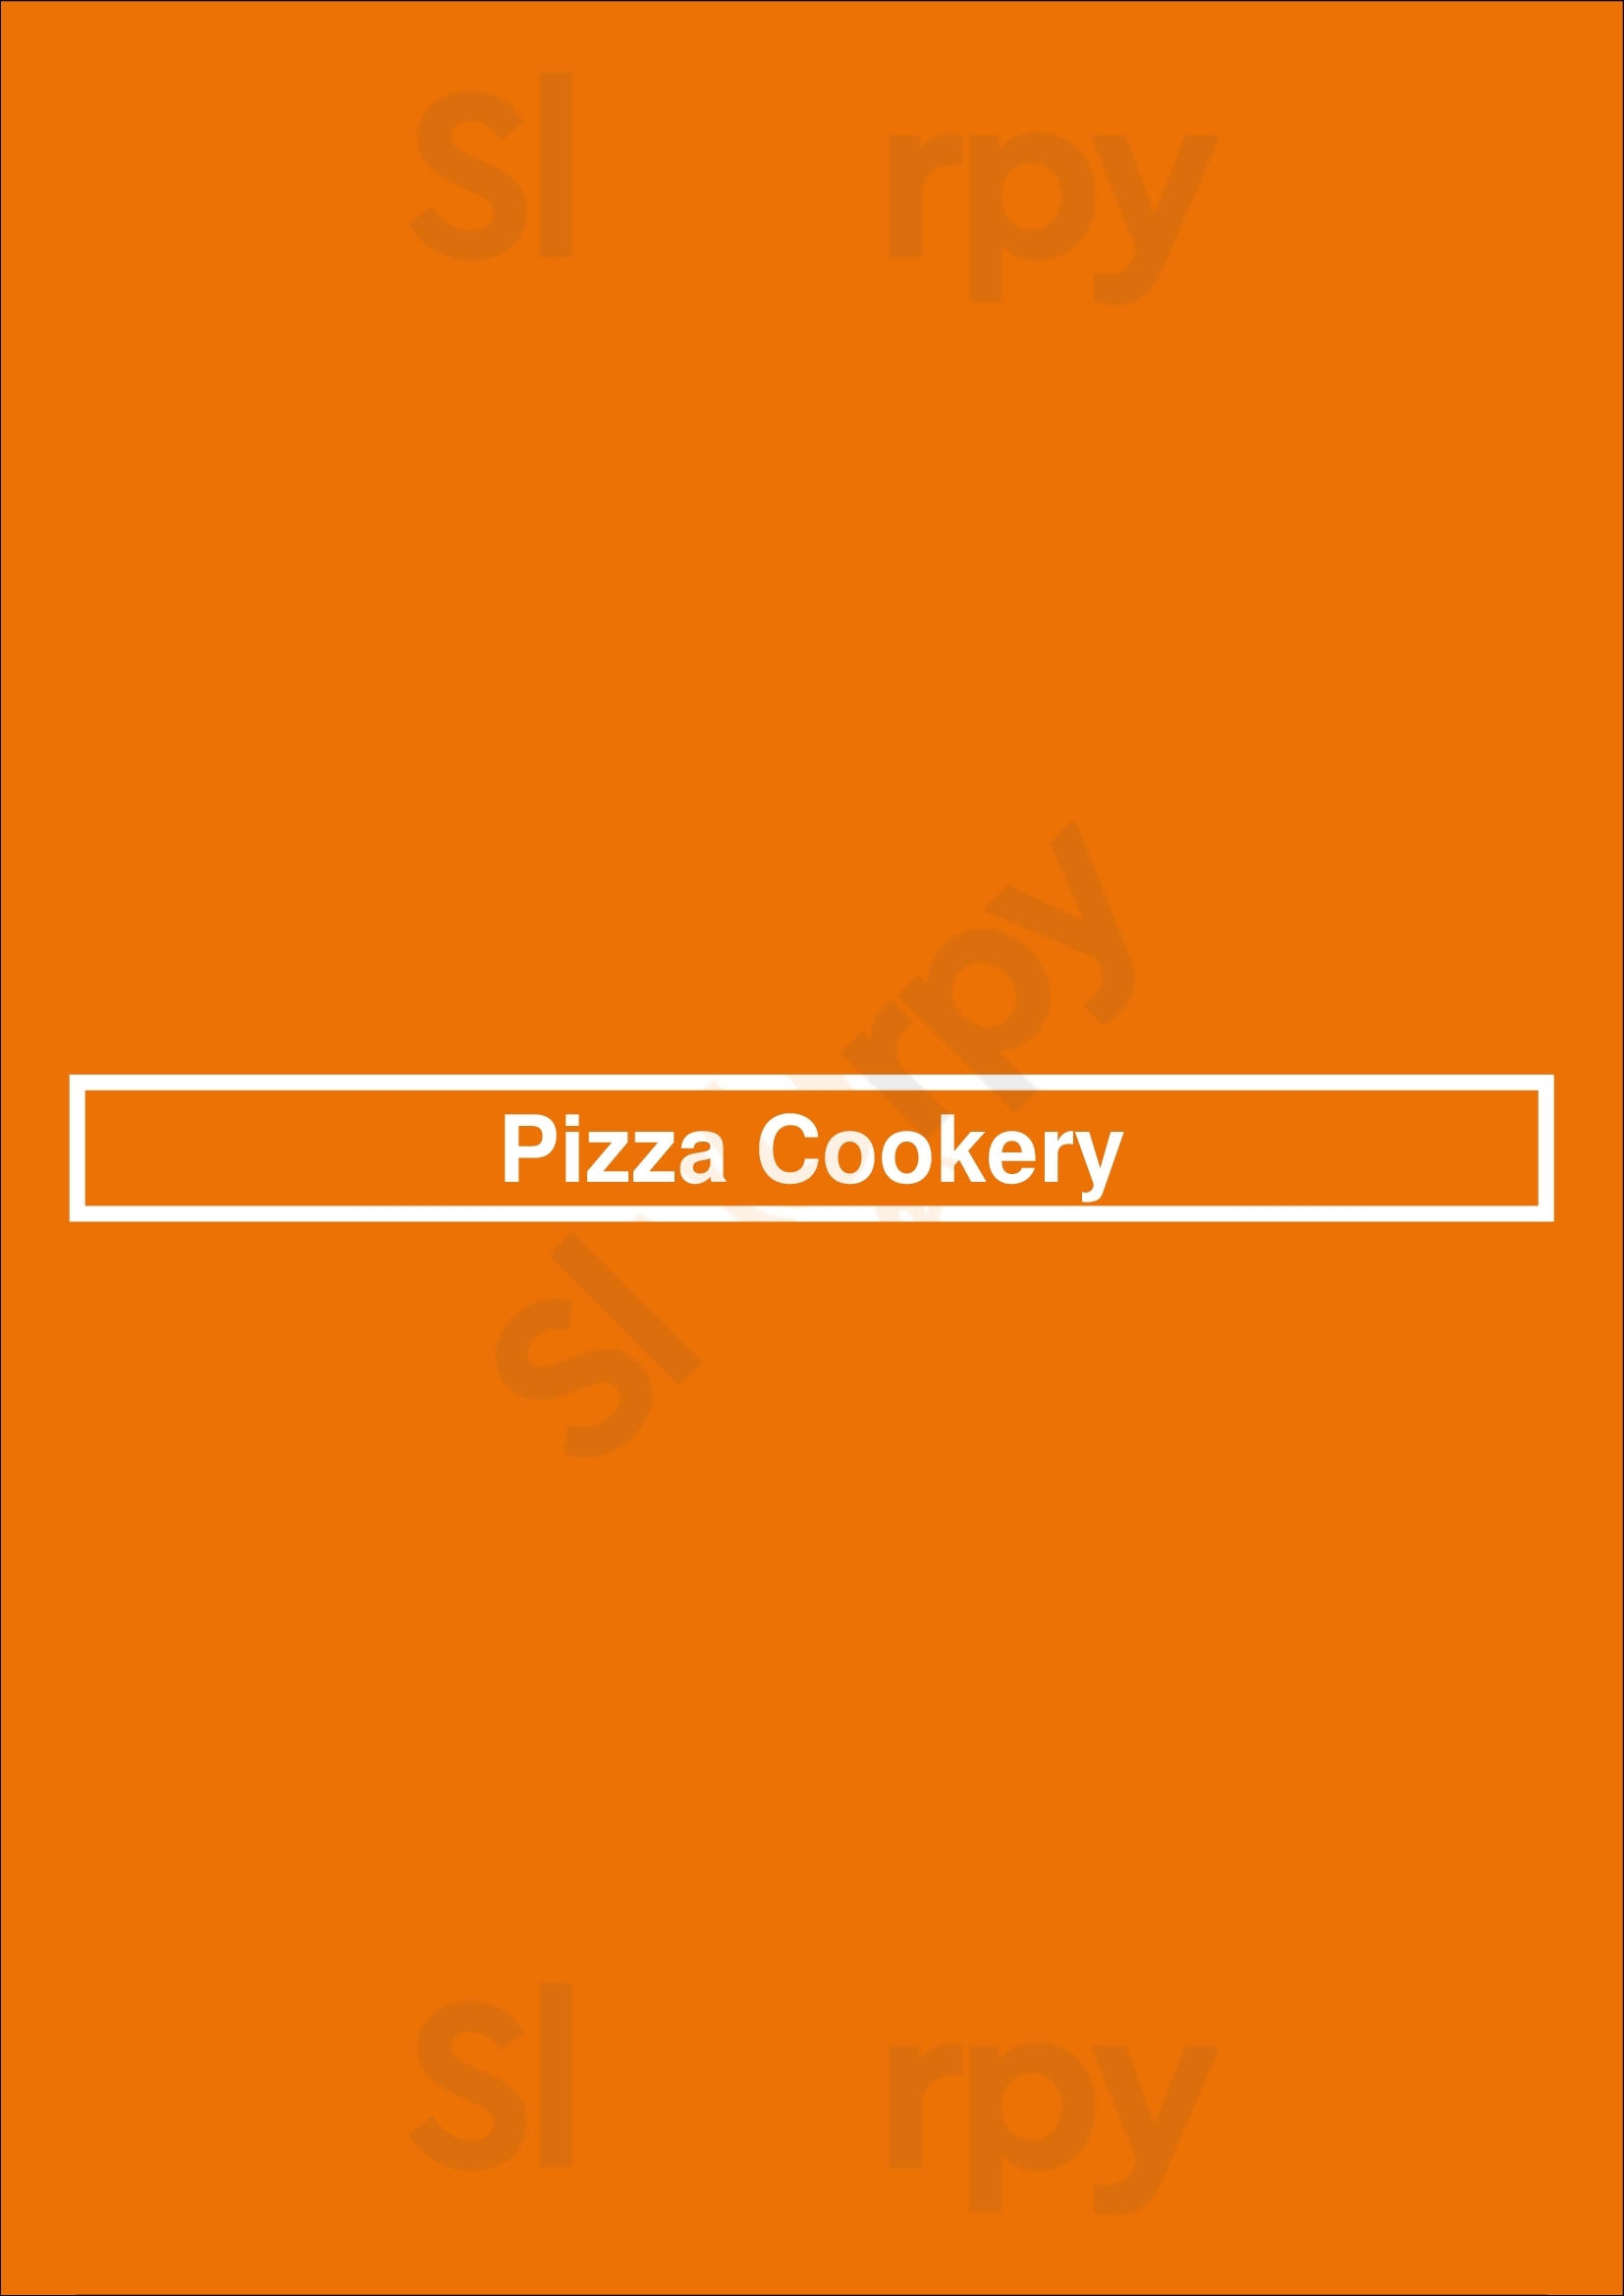 Pizza Cookery Los Angeles Menu - 1